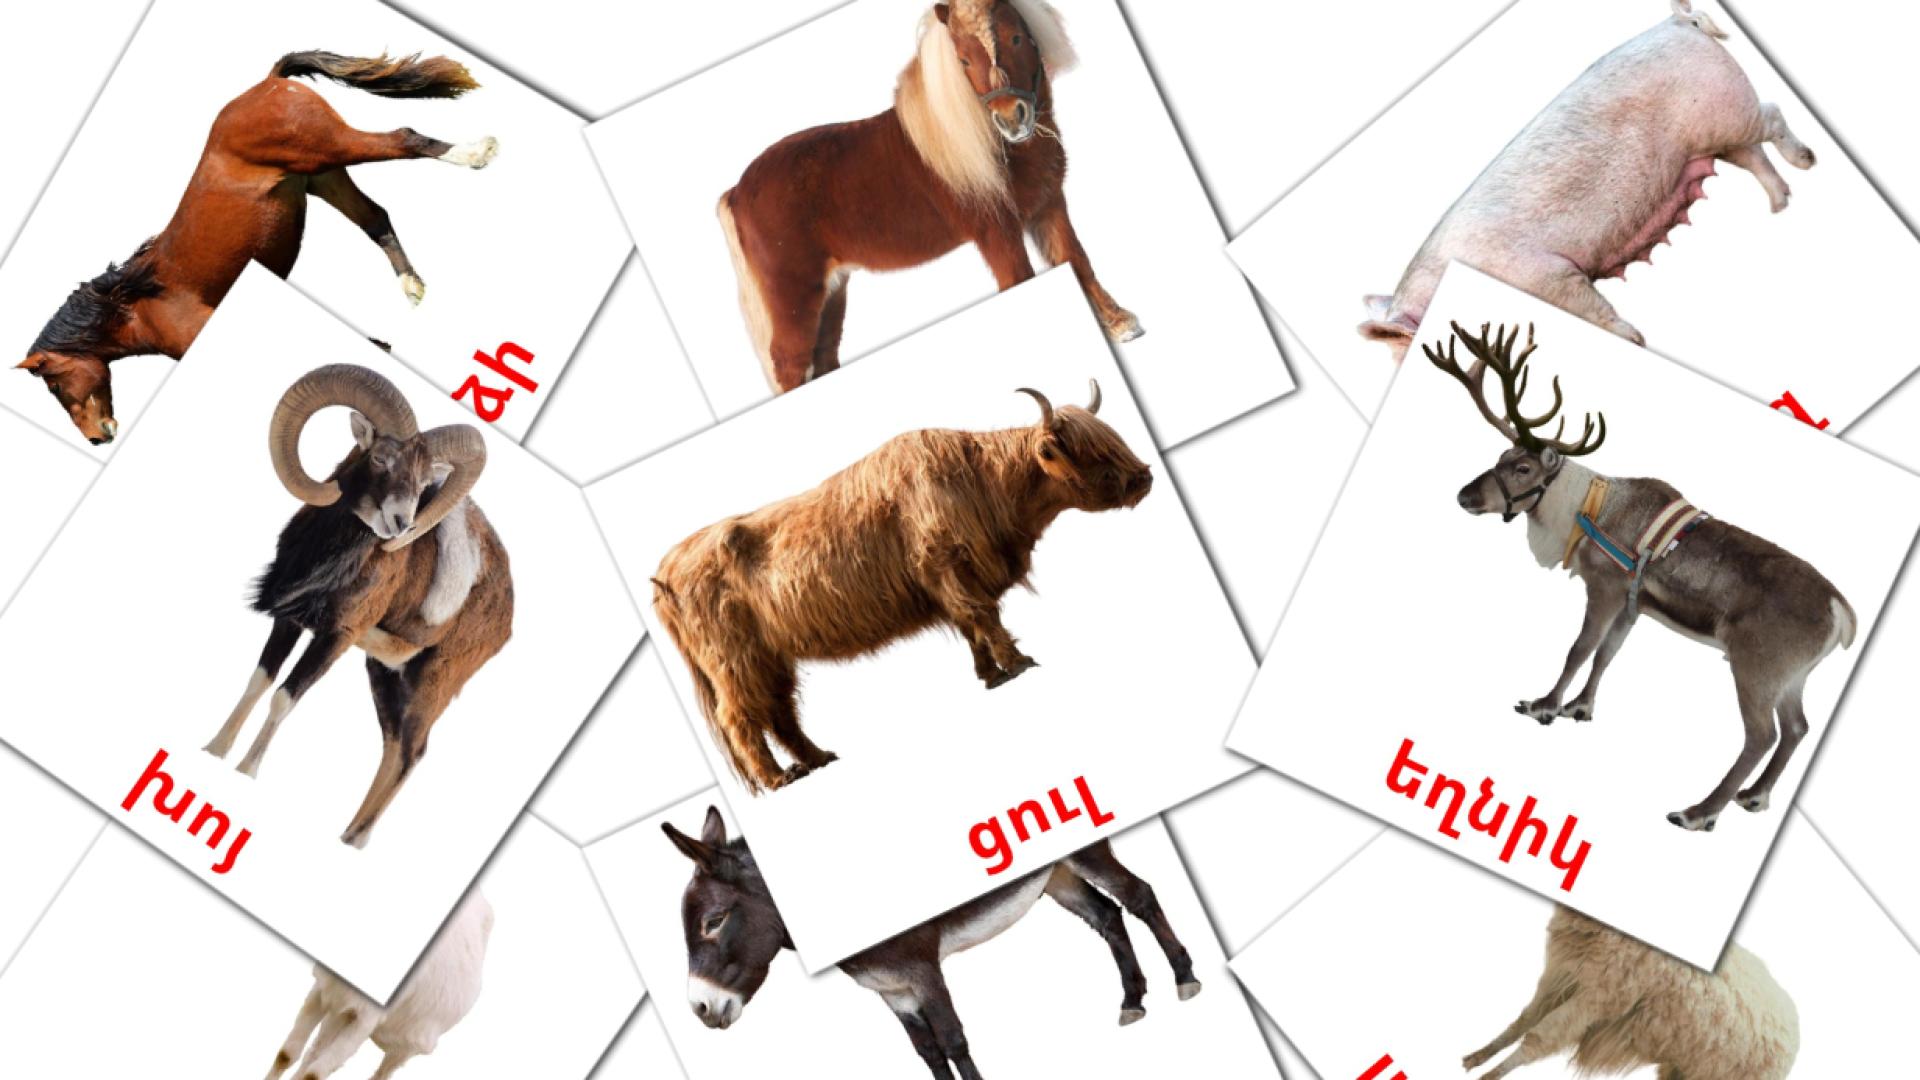 Farm animals - armenian vocabulary cards